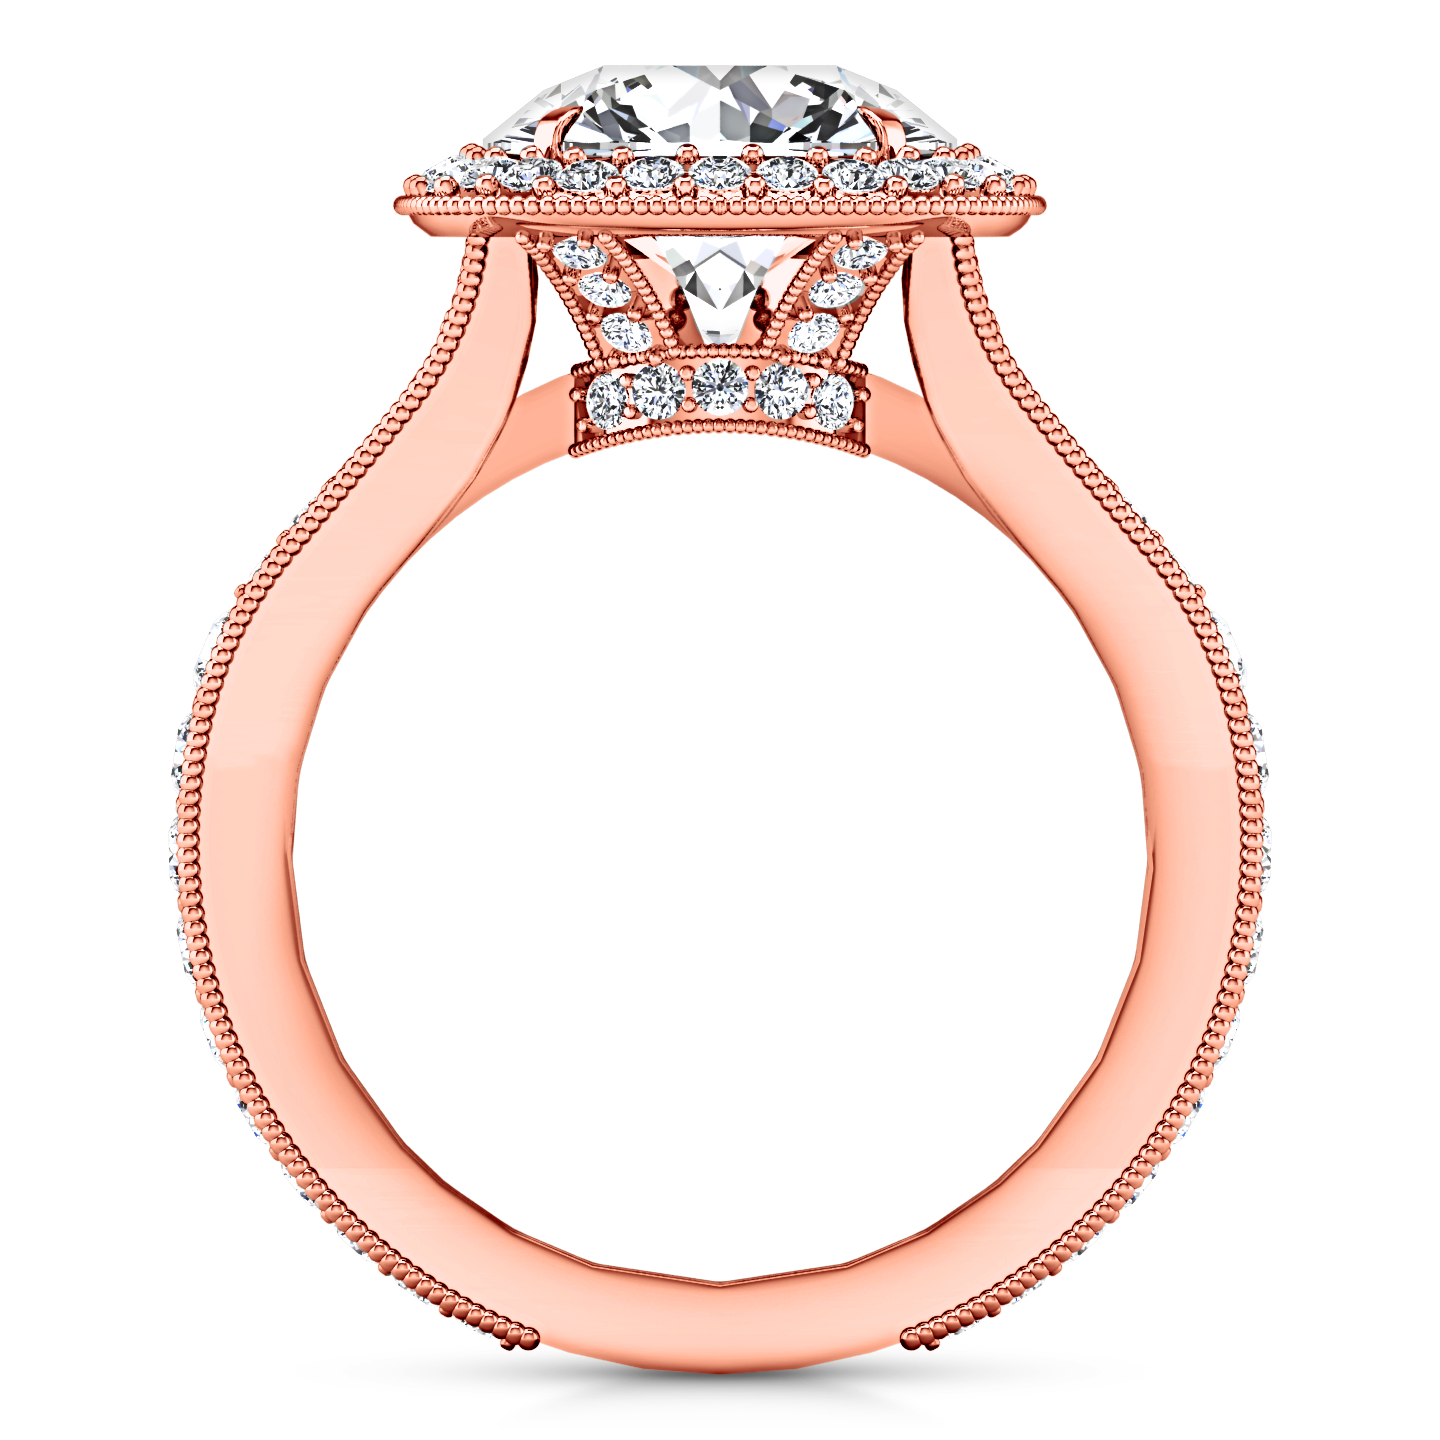 Halo Engagement Ring Anthea